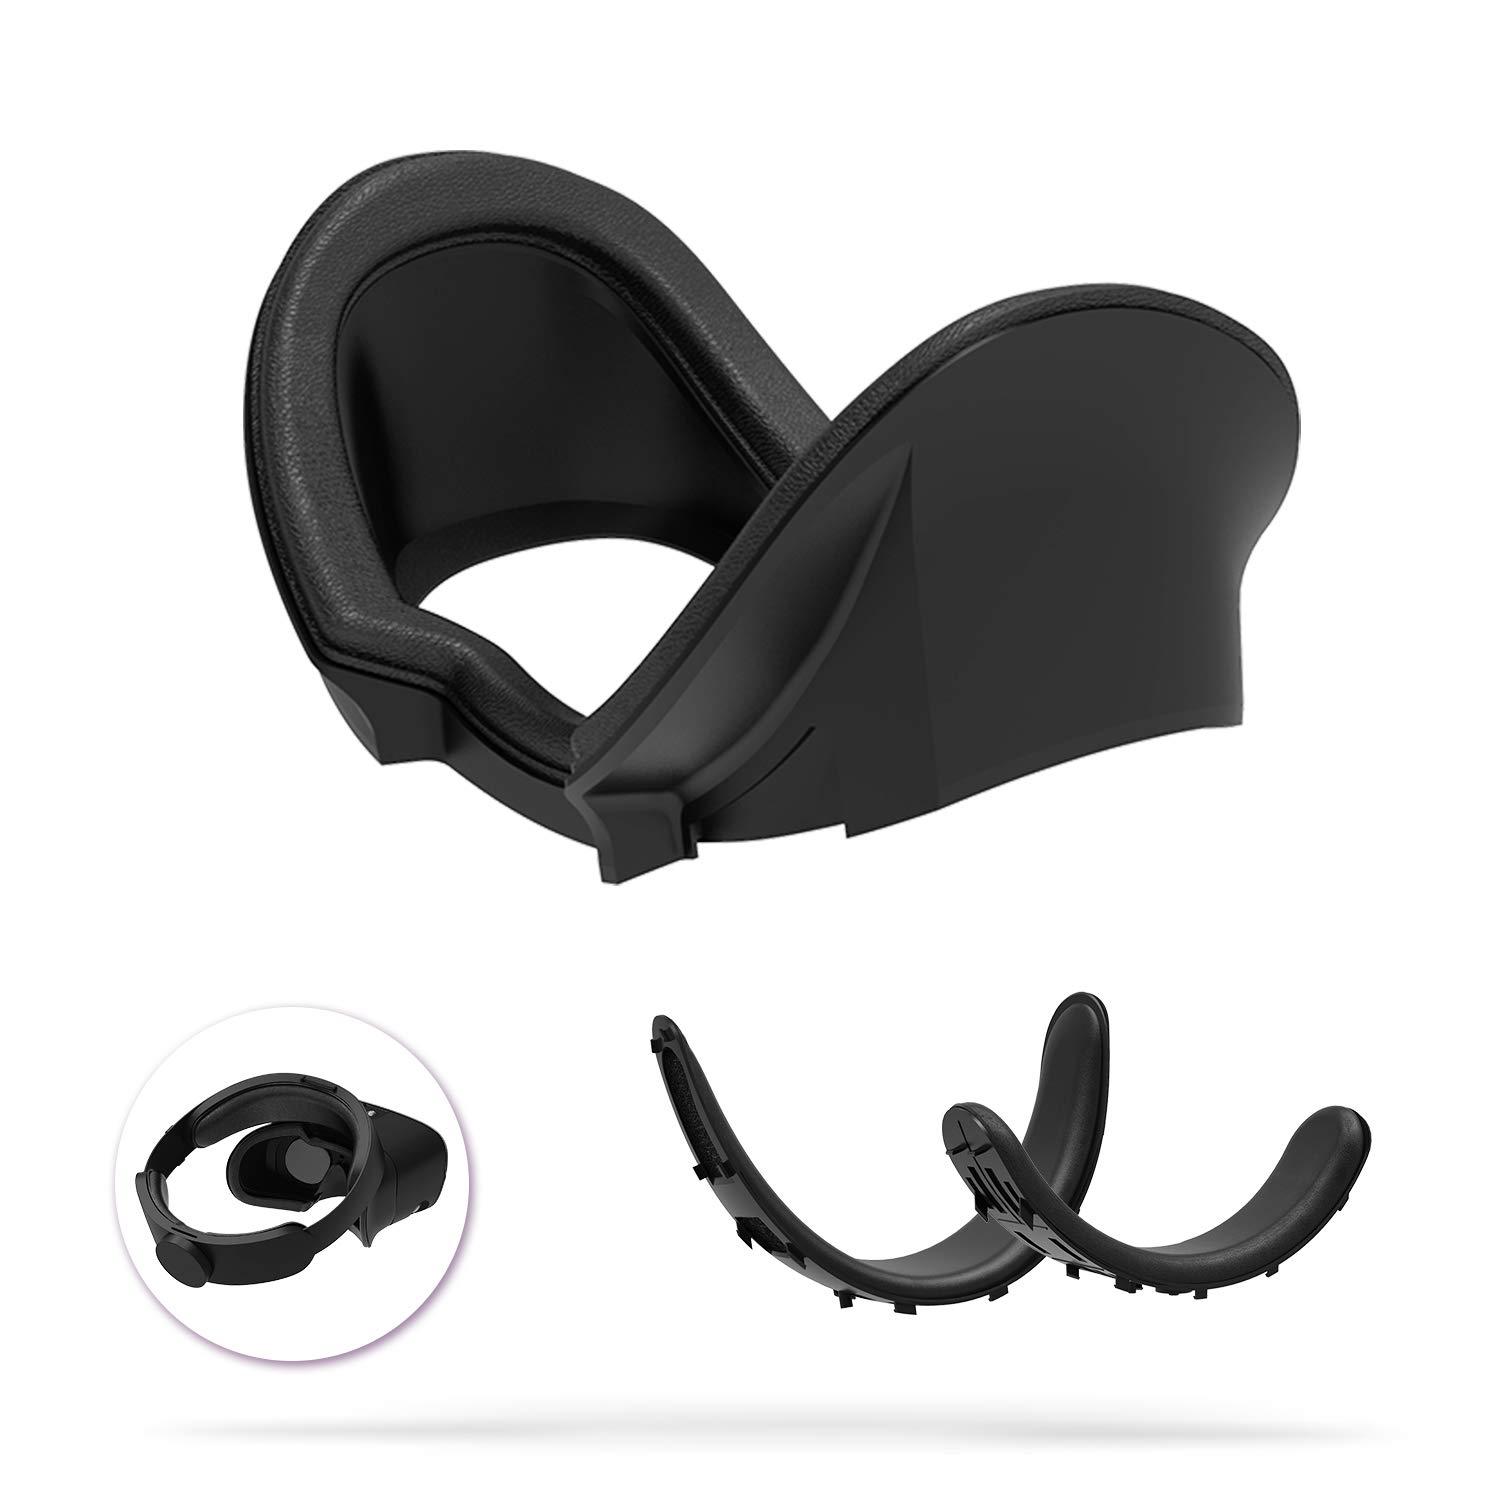 Oculus Rift S VR Cover 3 ชิ้น กันเหงื่อ-กันฝุ่น-กันจอไหม้